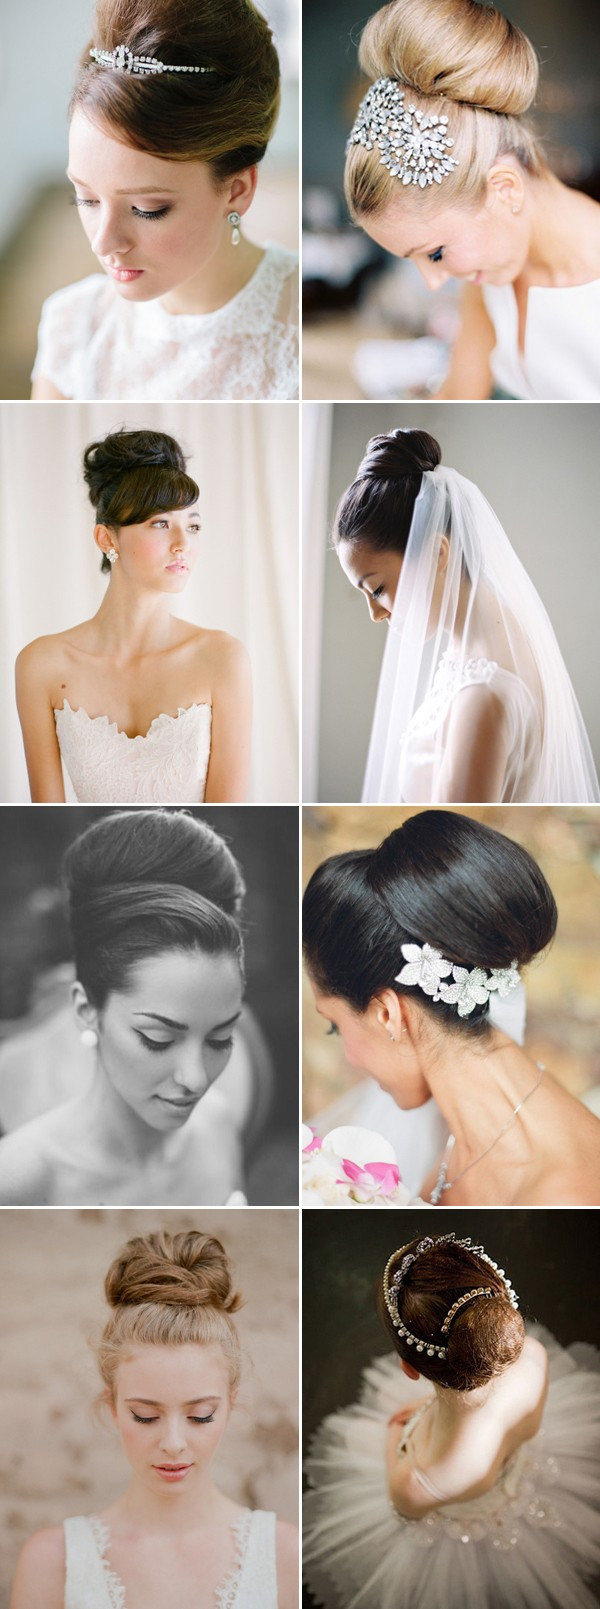 Audrey Hepburn Wedding Hairstyles
 250 Bridal Wedding Hairstyles for Long Hair That Will